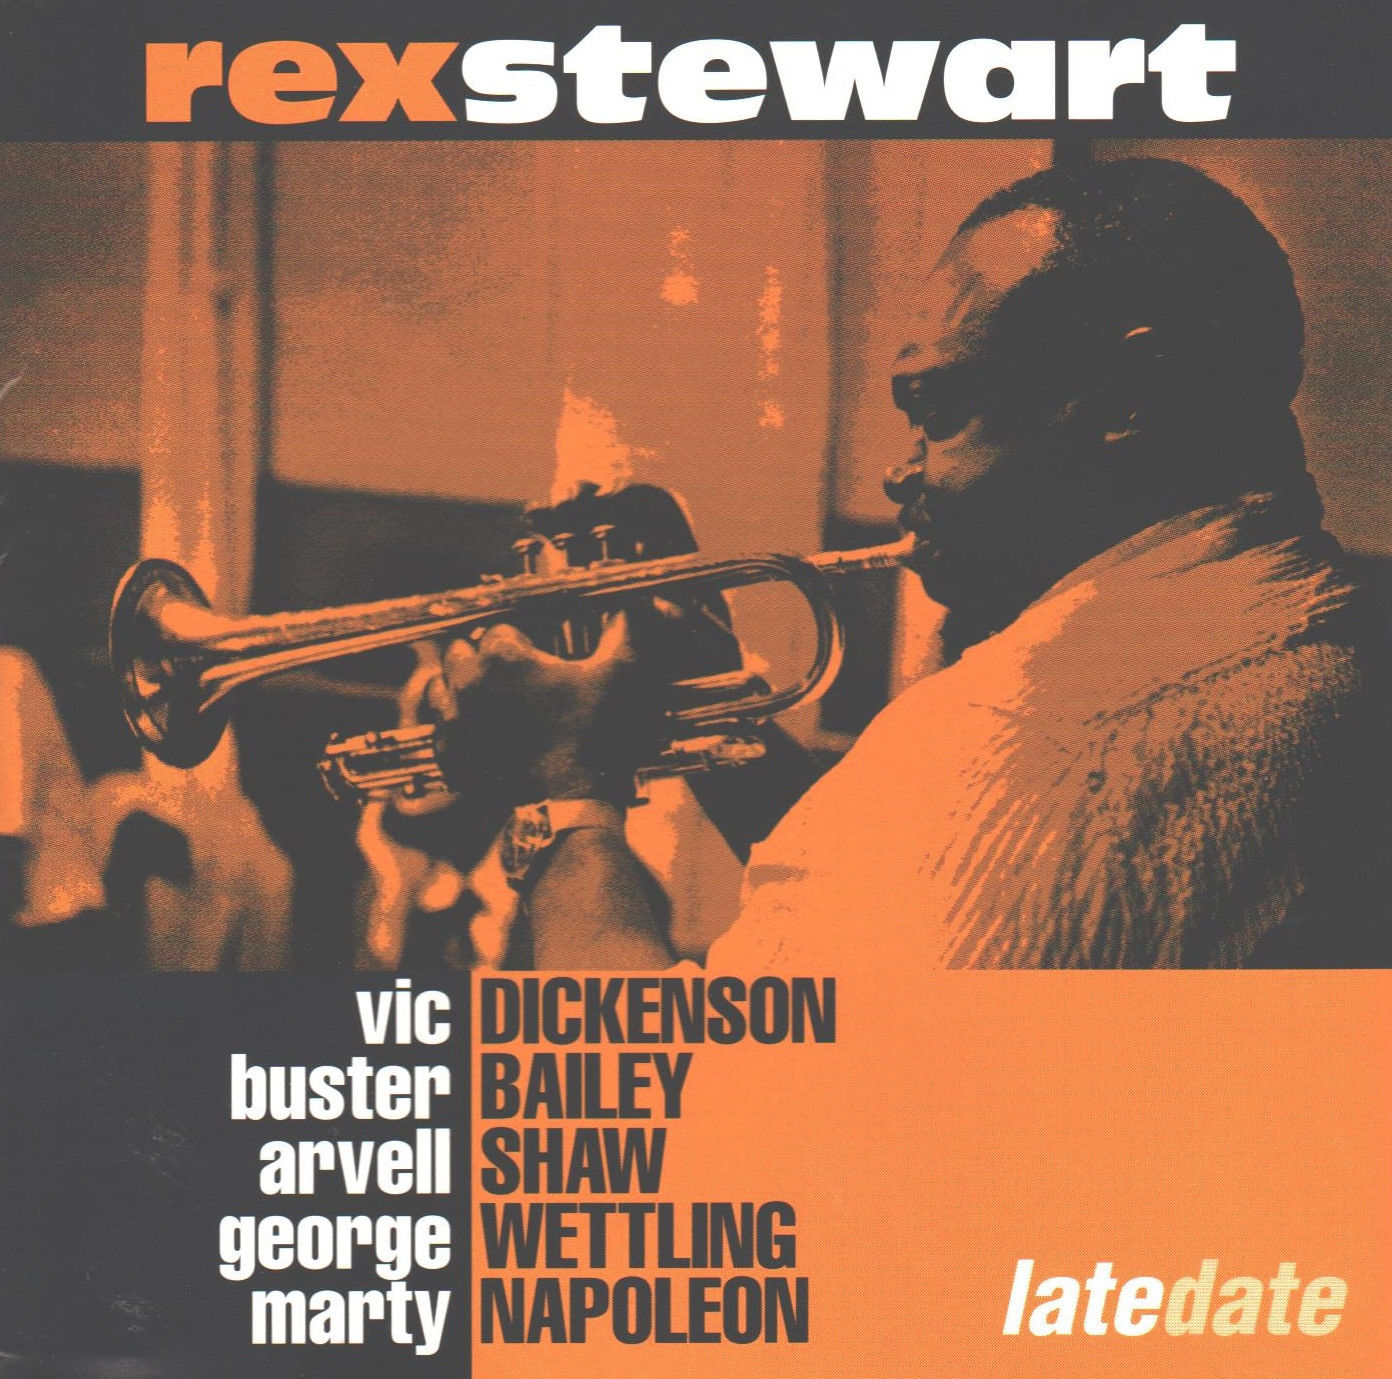 REX STEWART - Late Date cover 